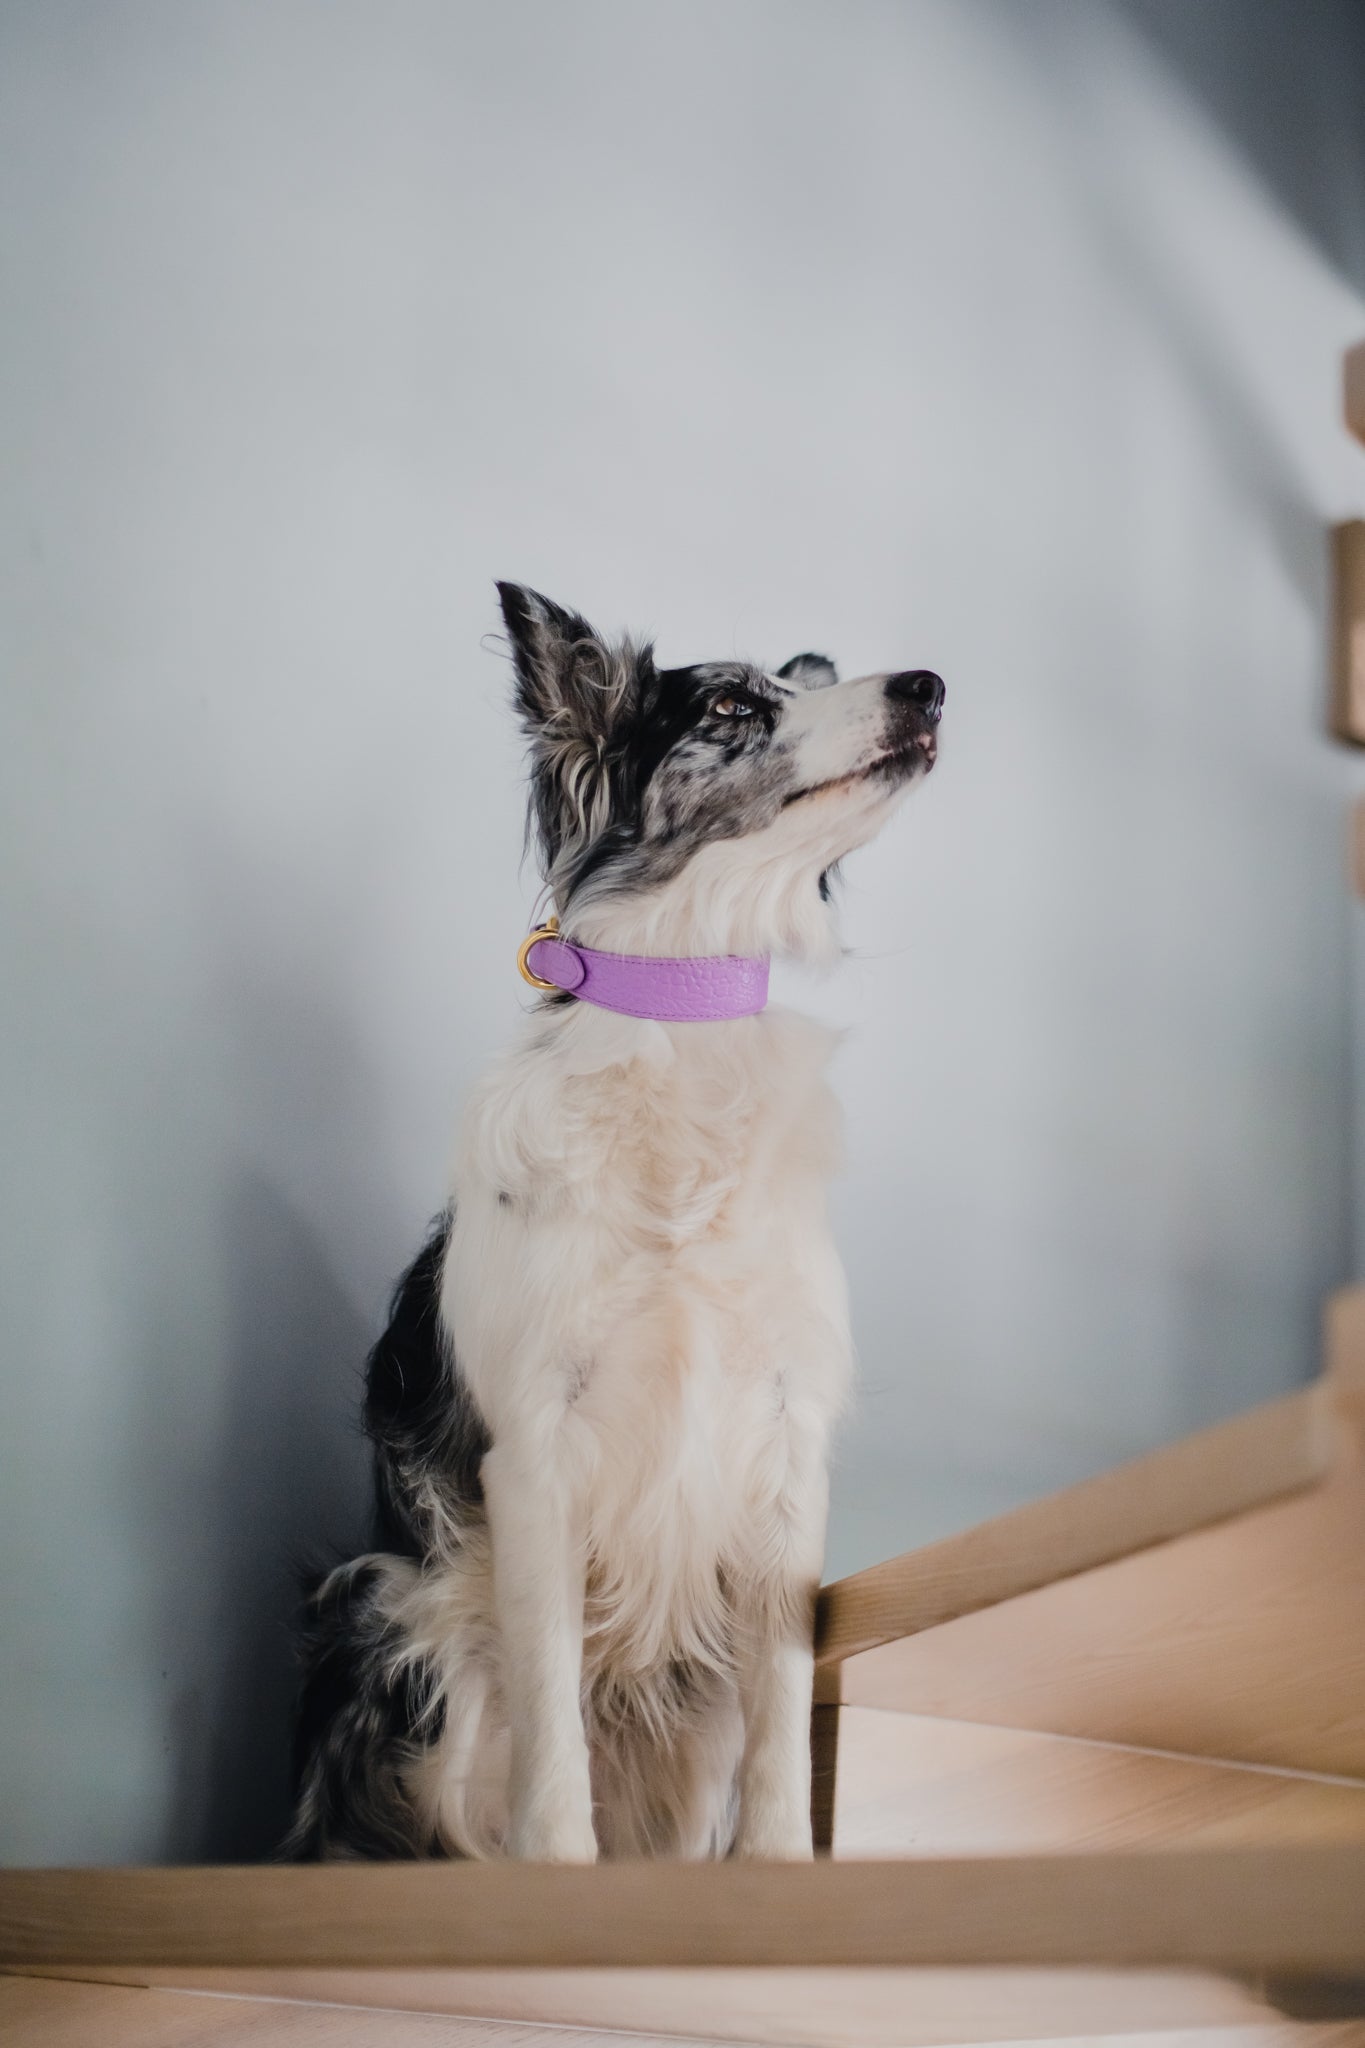 Violet Croco Dog Collar Thin